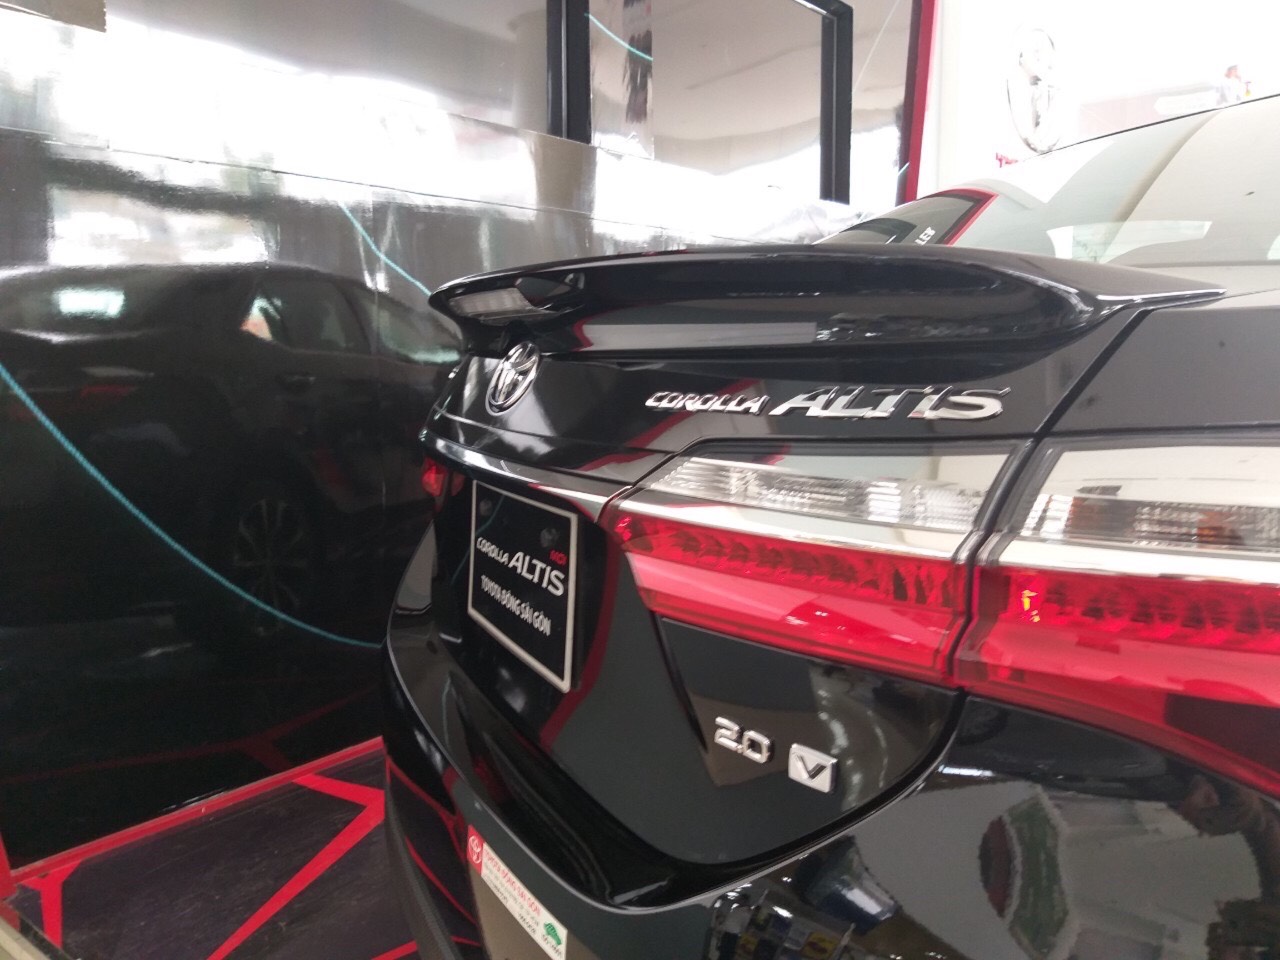 Toyota Corolla altis 1.8E MT 2019 - Bán xe Toyota Corolla altis 1.8E MT đời 2019, màu đen